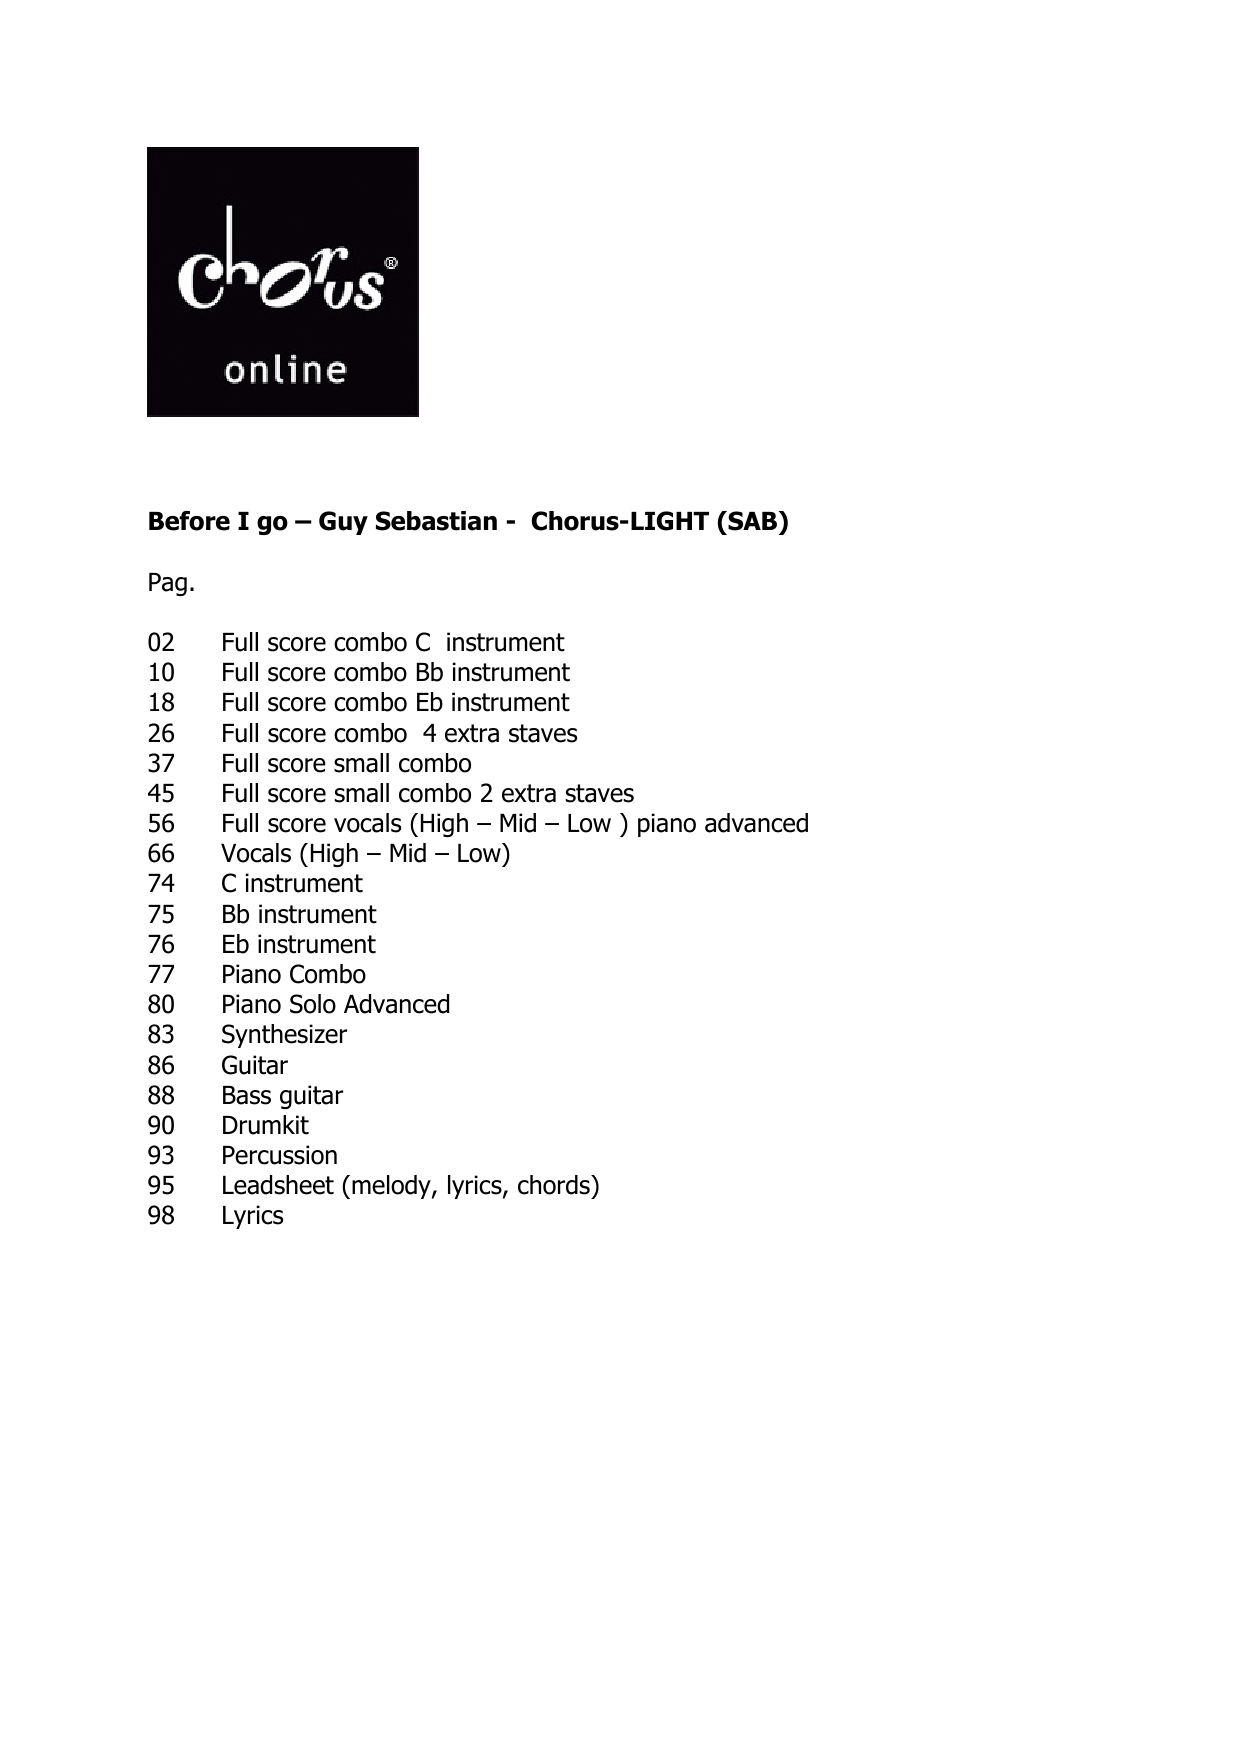 Guy Sebastian Before I Go (arr. Frank de Vreeze) sheet music notes printable PDF score